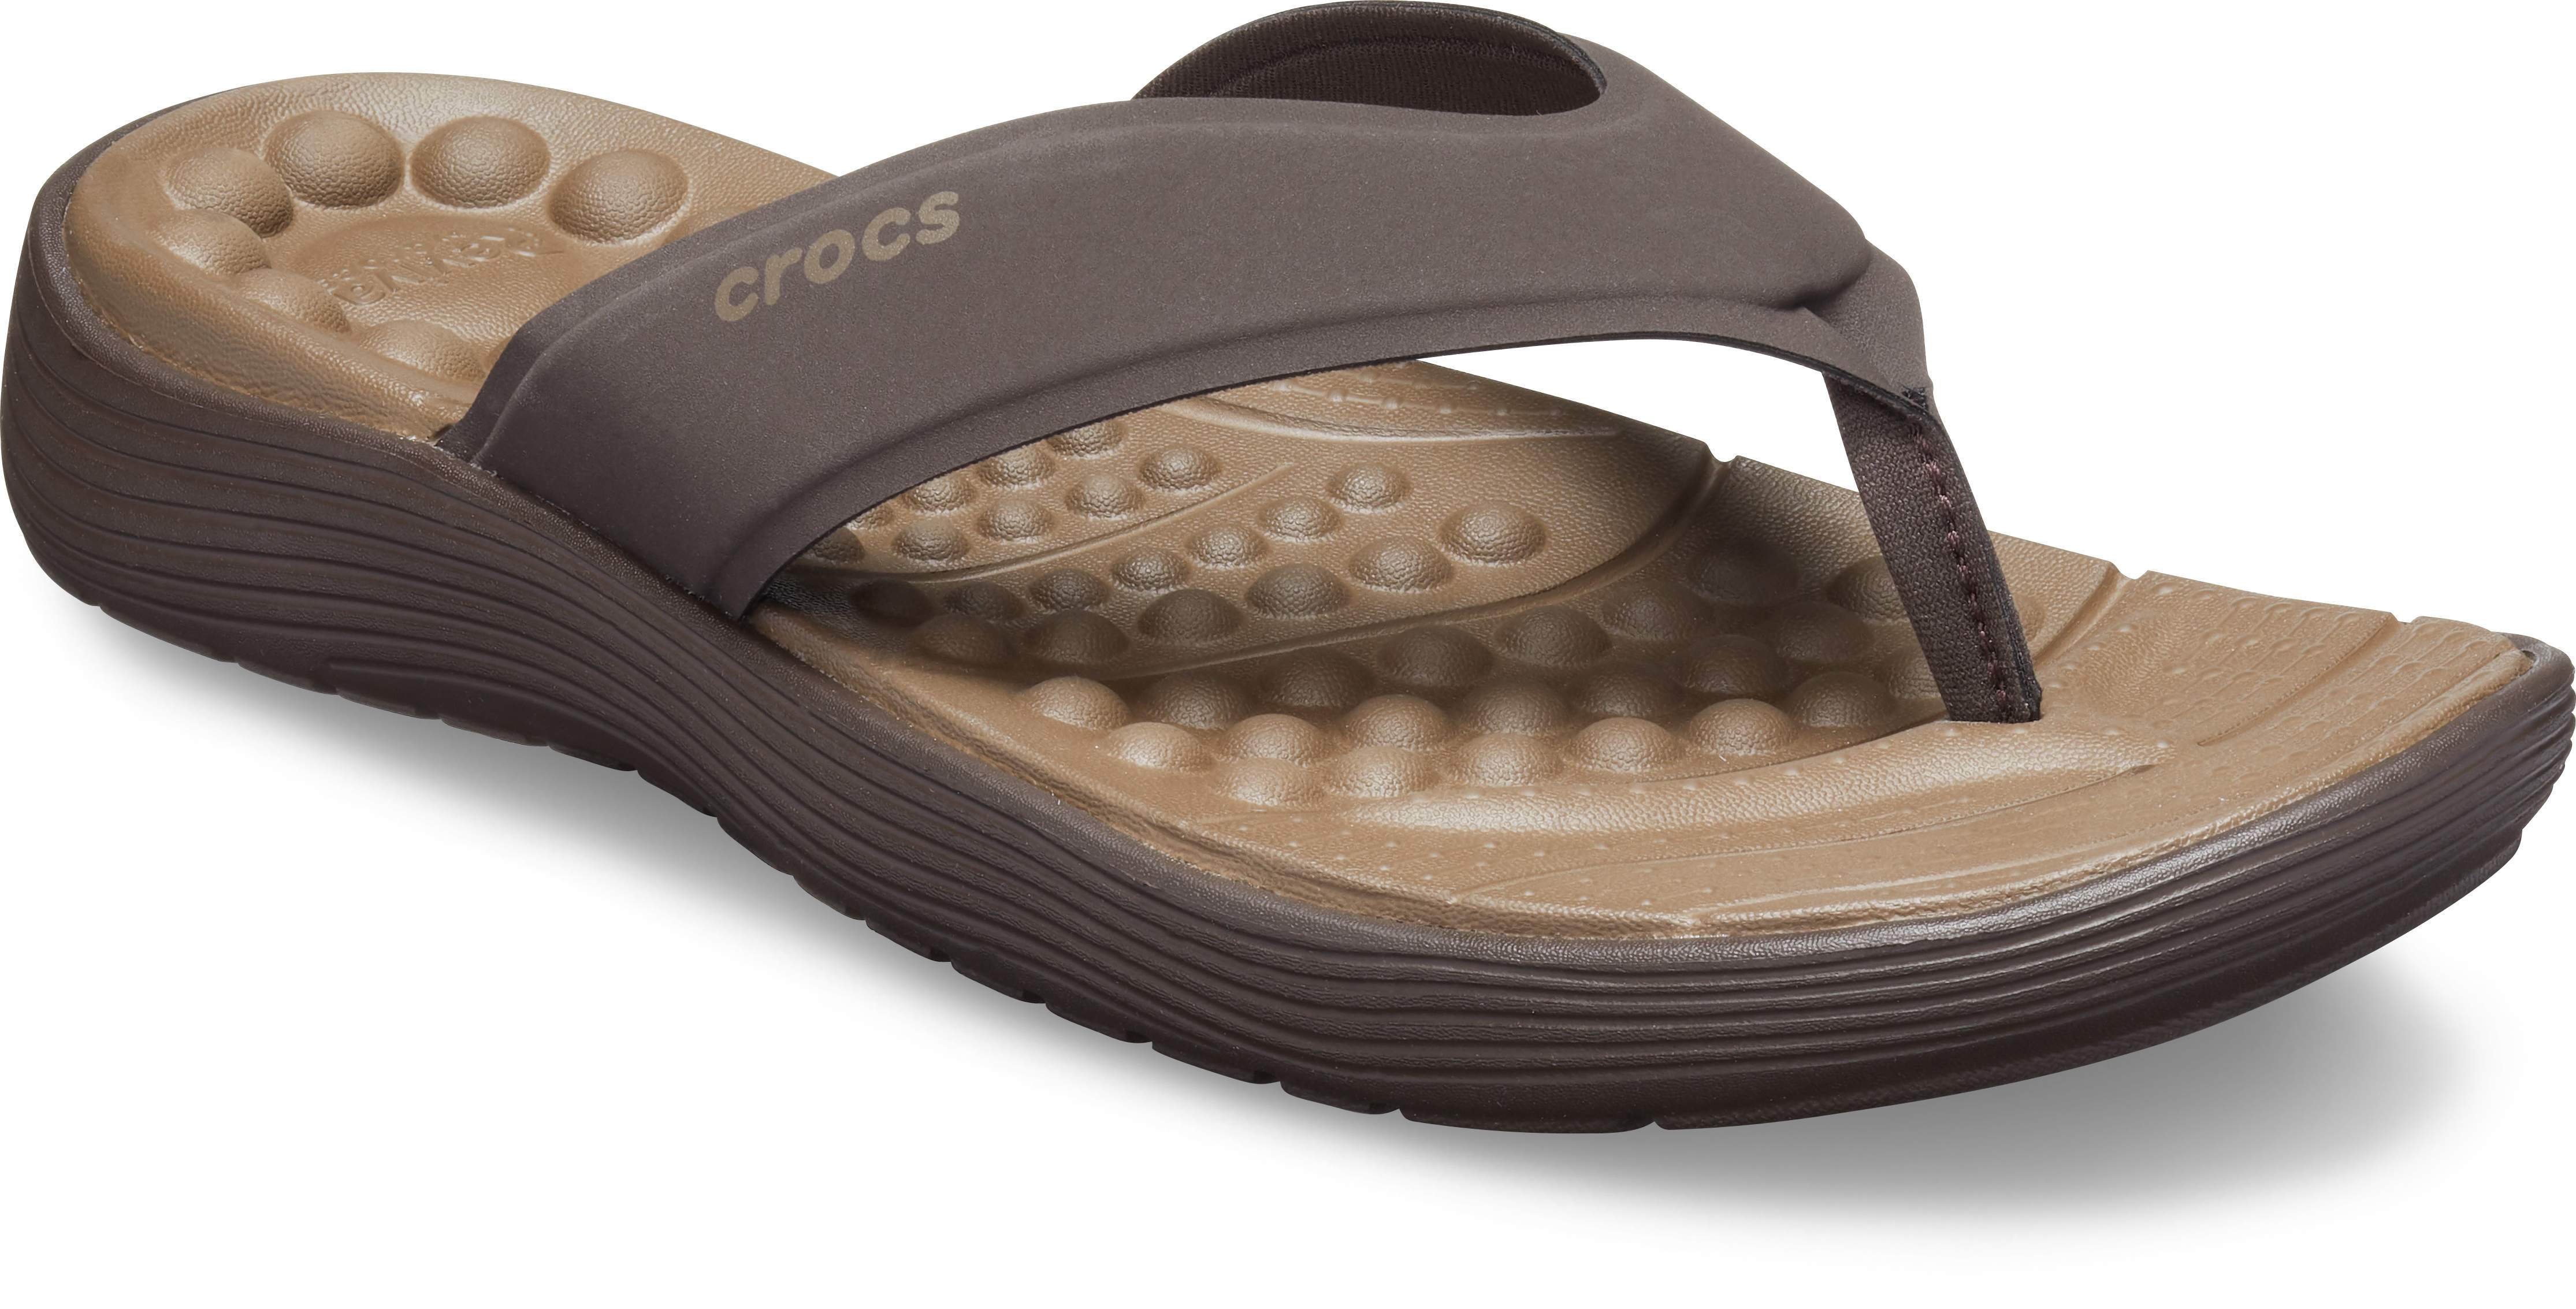 mens crocs flip flops size 11